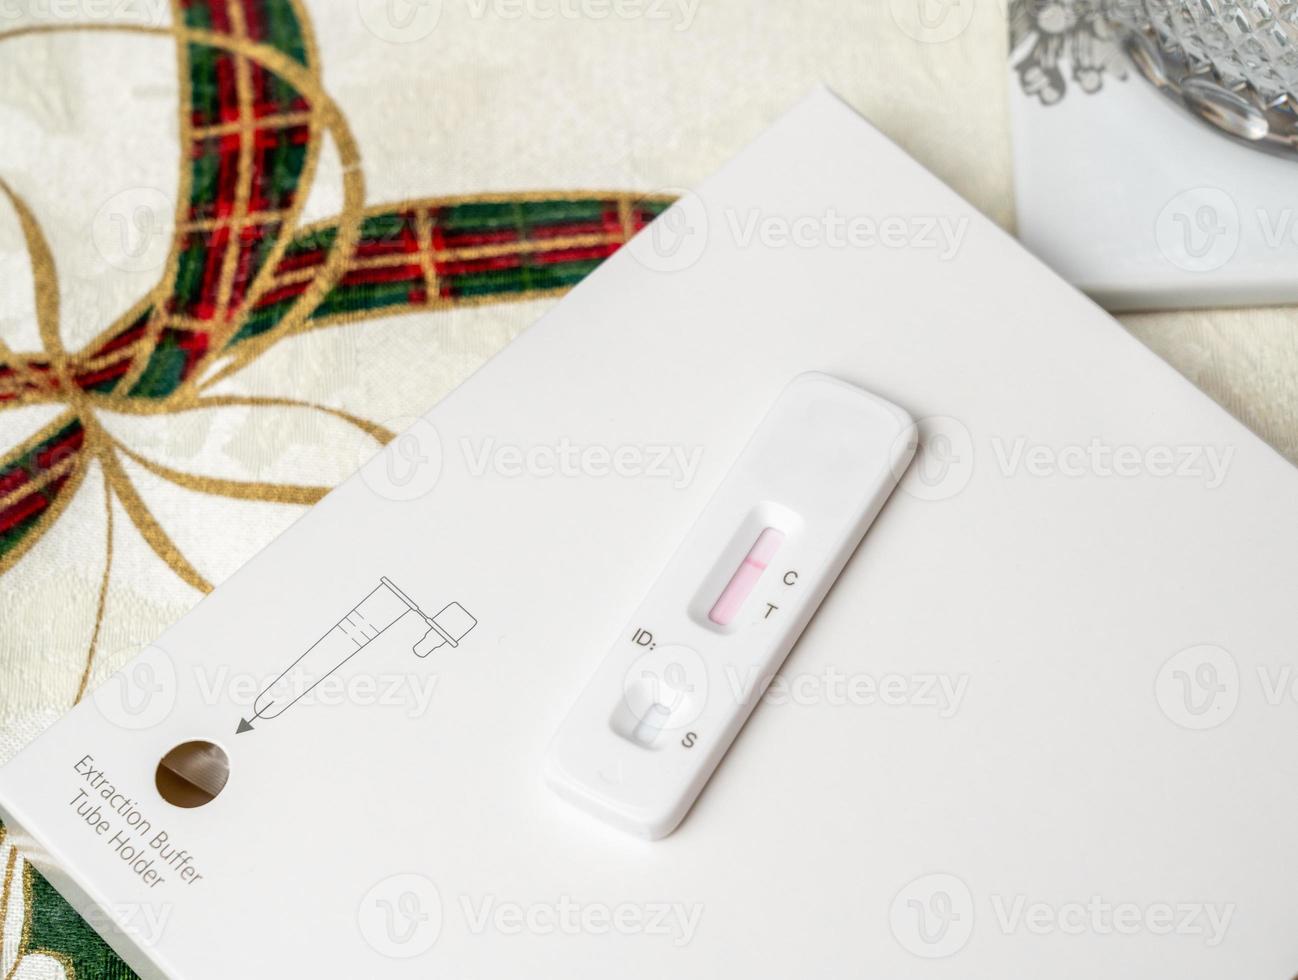 kit de autoteste para covid-19 mostrando resultado negativo no natal foto